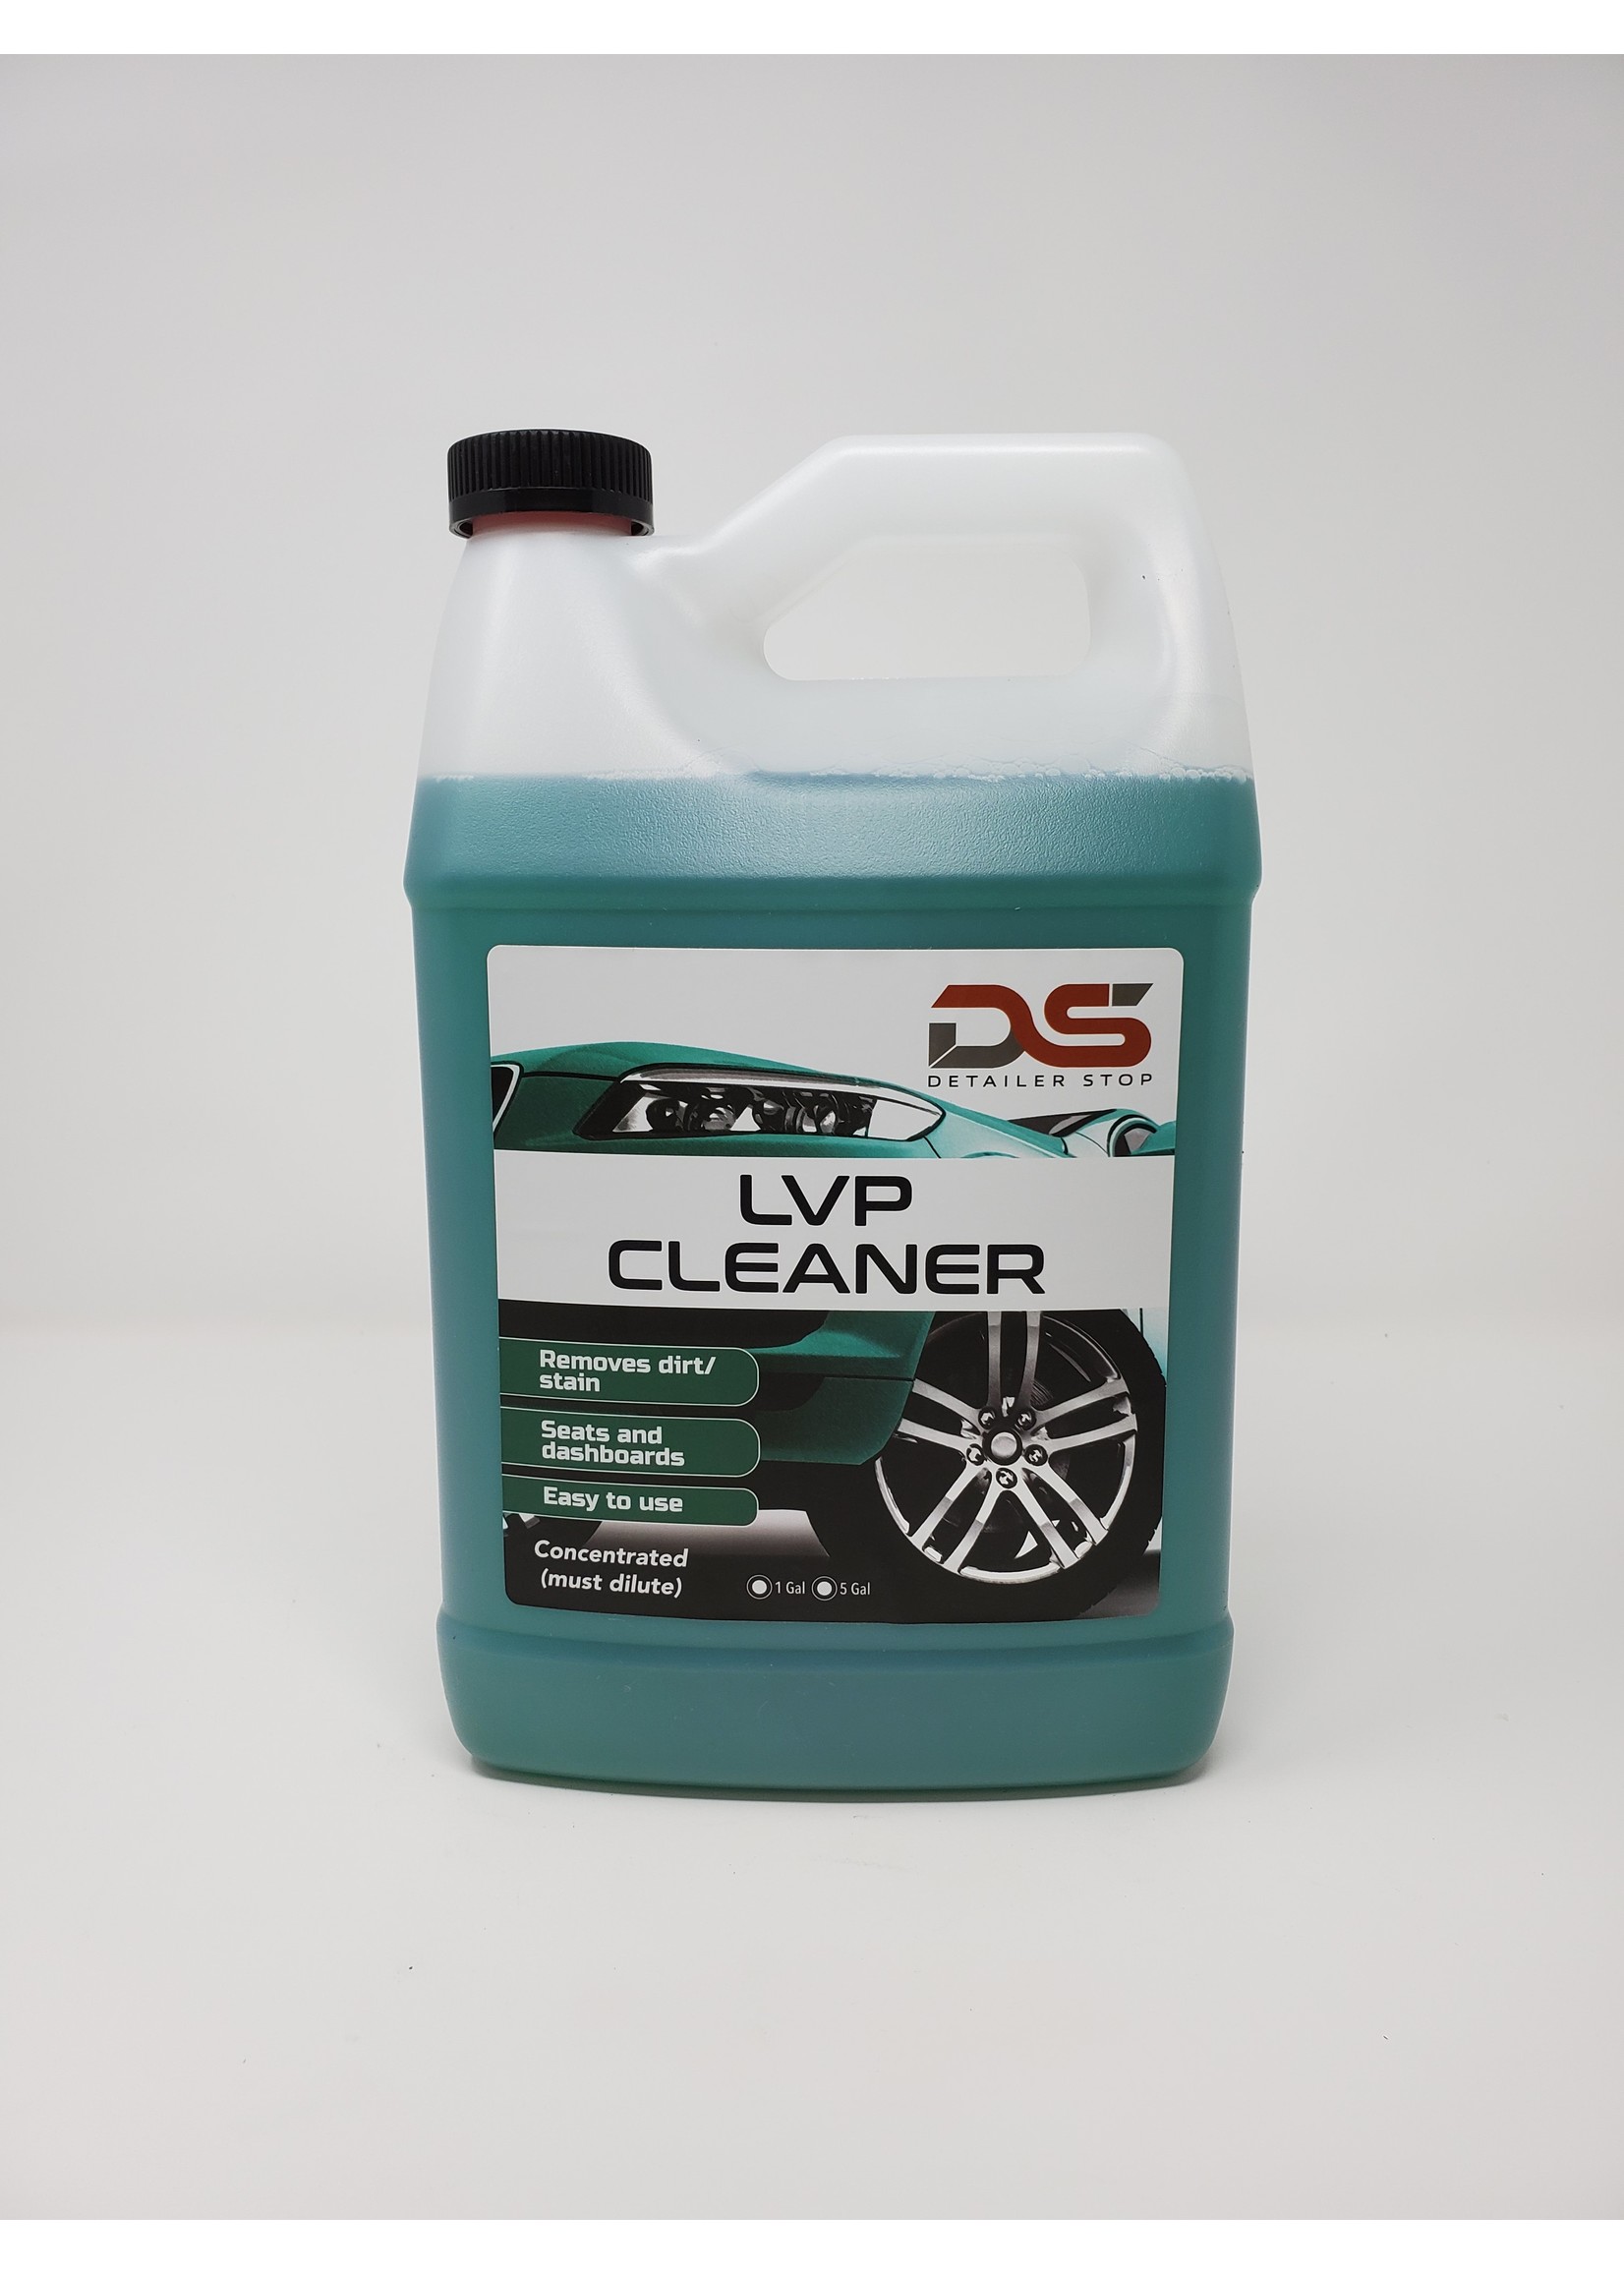 Detailer Stop LVP Cleaner - 1 Gallon